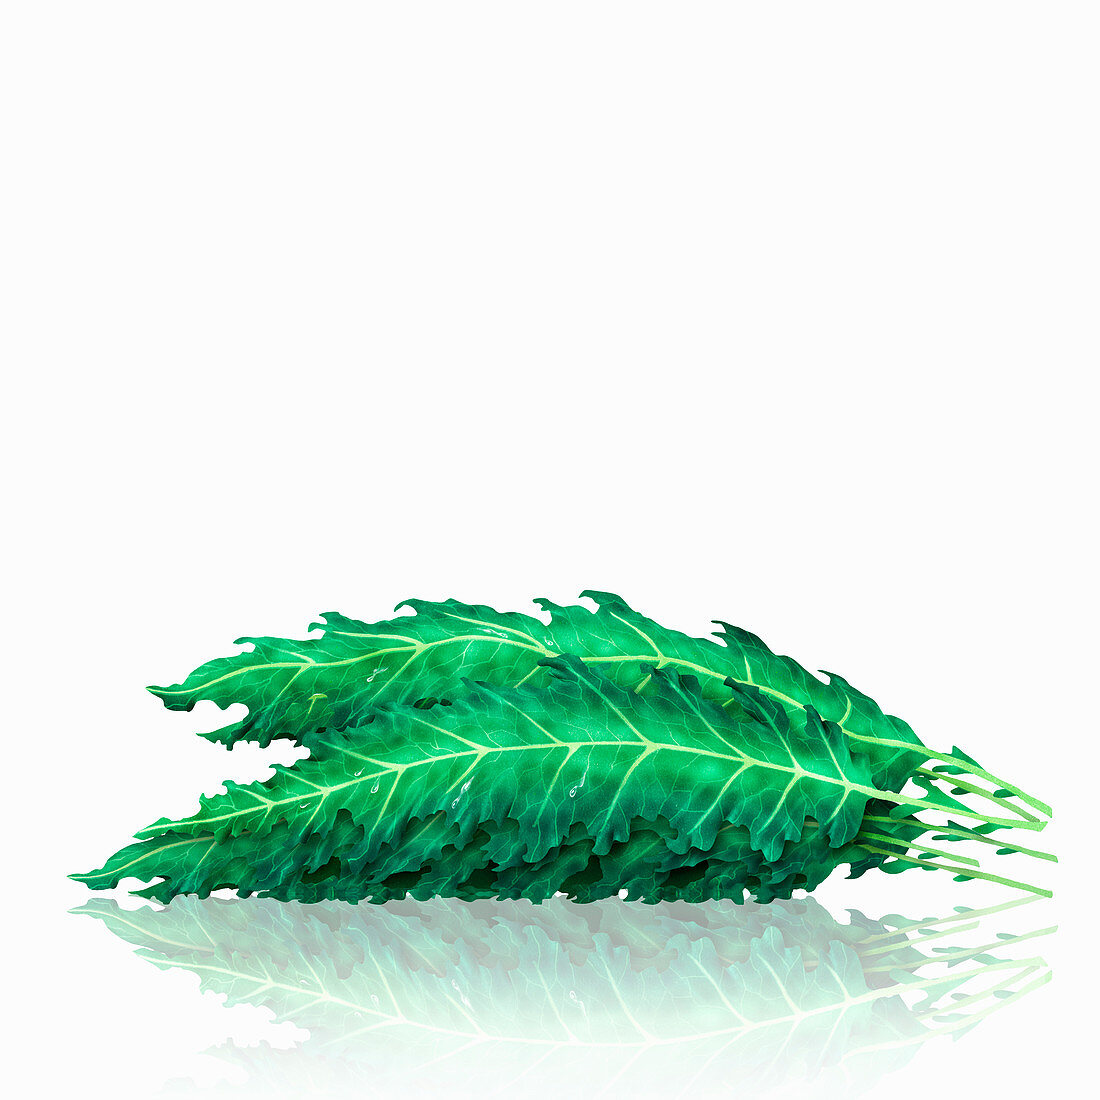 Pile of kale leaves, illustration